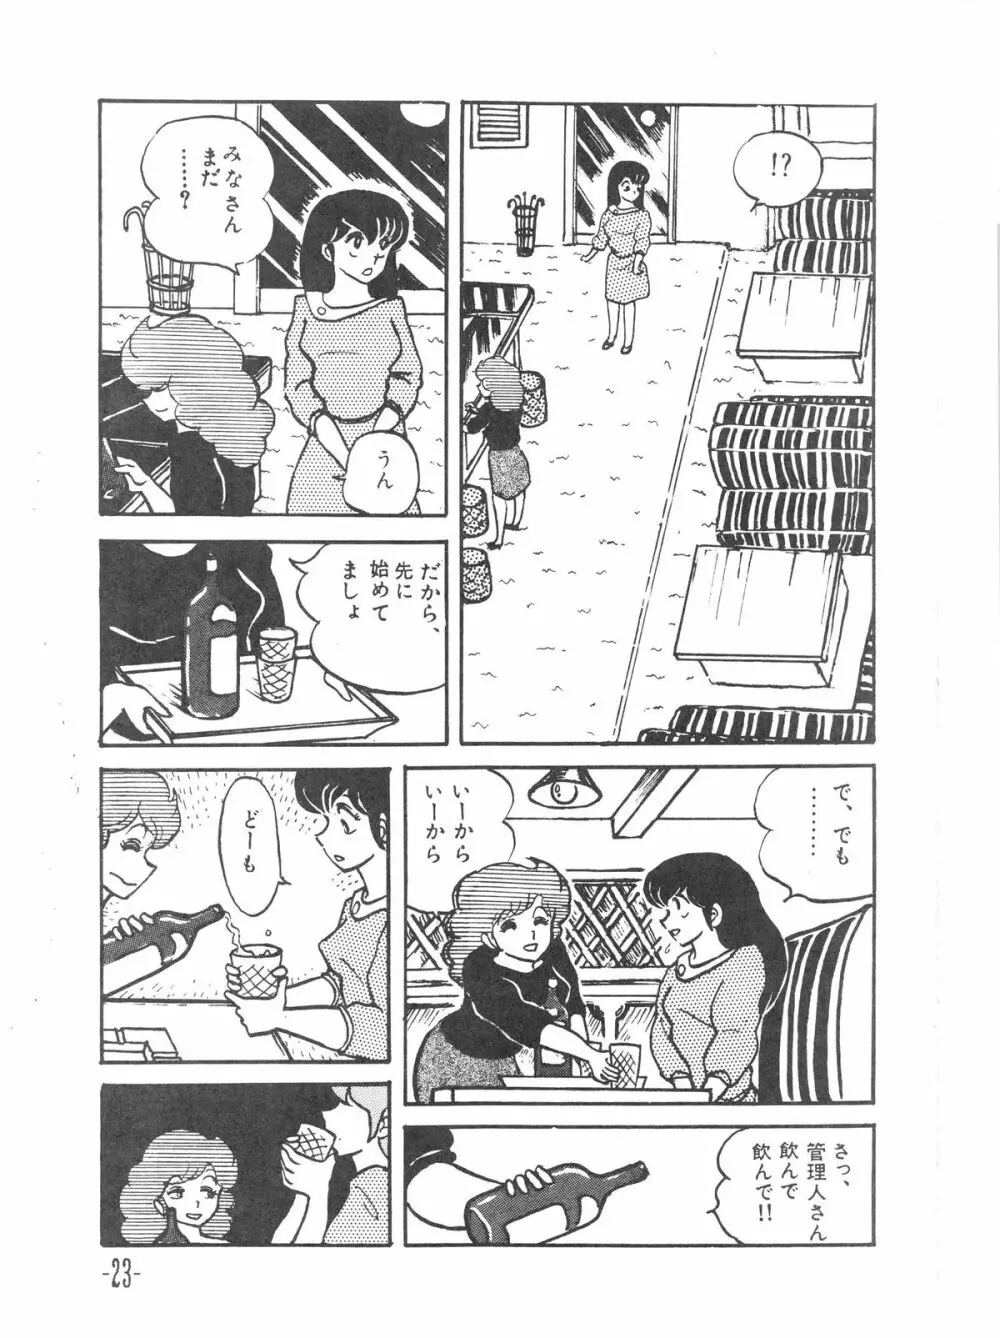 MIBOJIN GESHUKU 1 & 2 23ページ